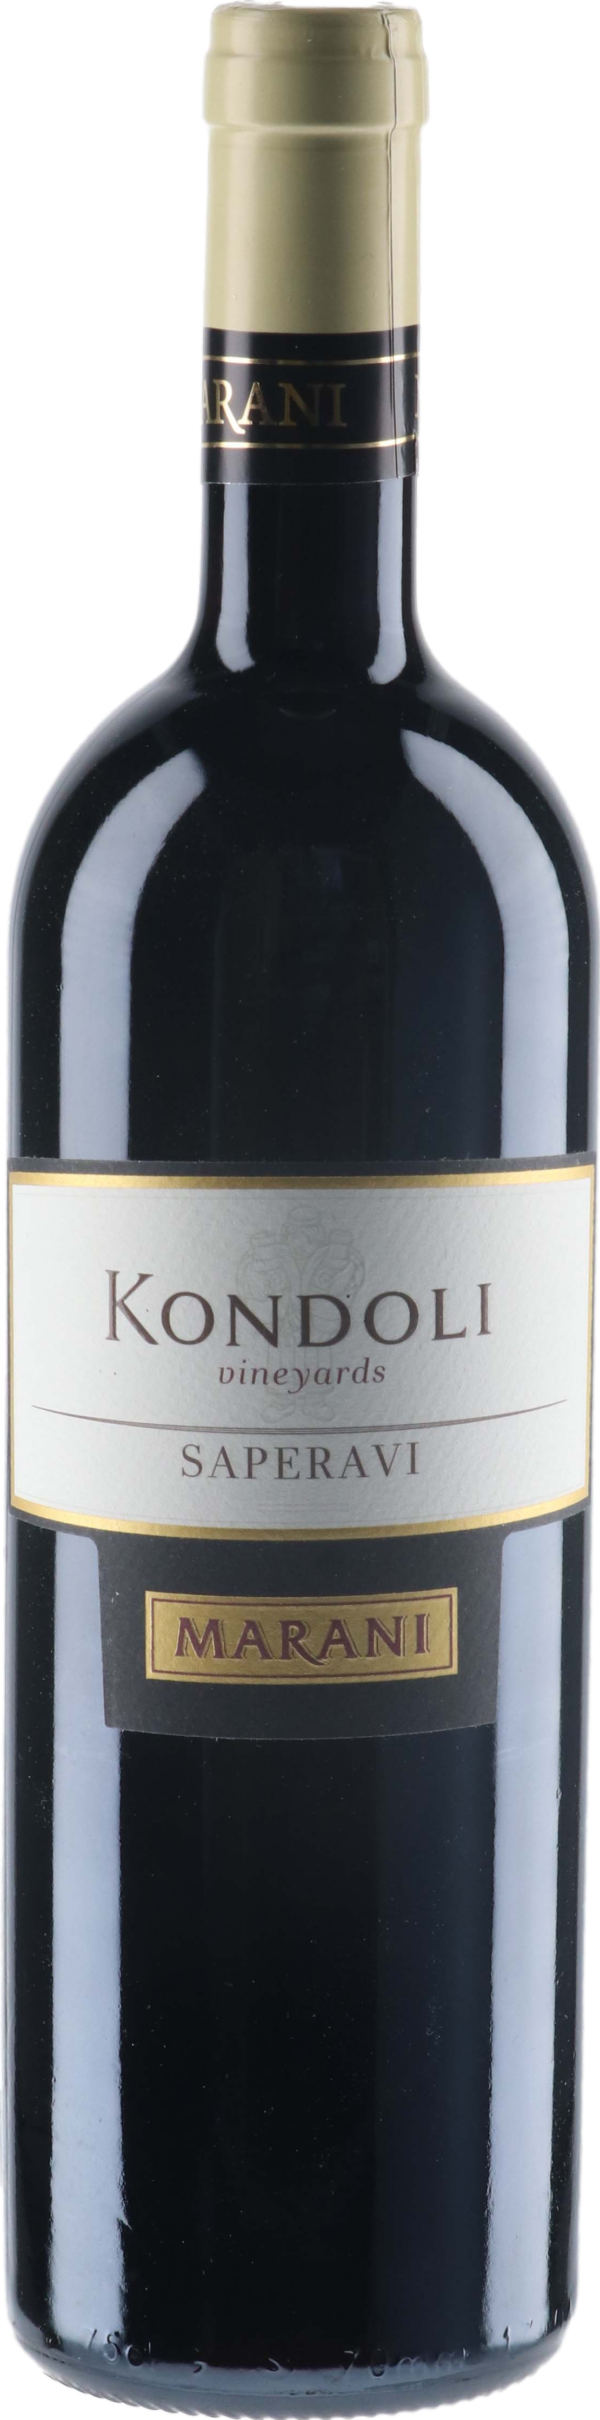 Product image of Marani Kondoli Vineyards Saperavi 2019 from 8wines